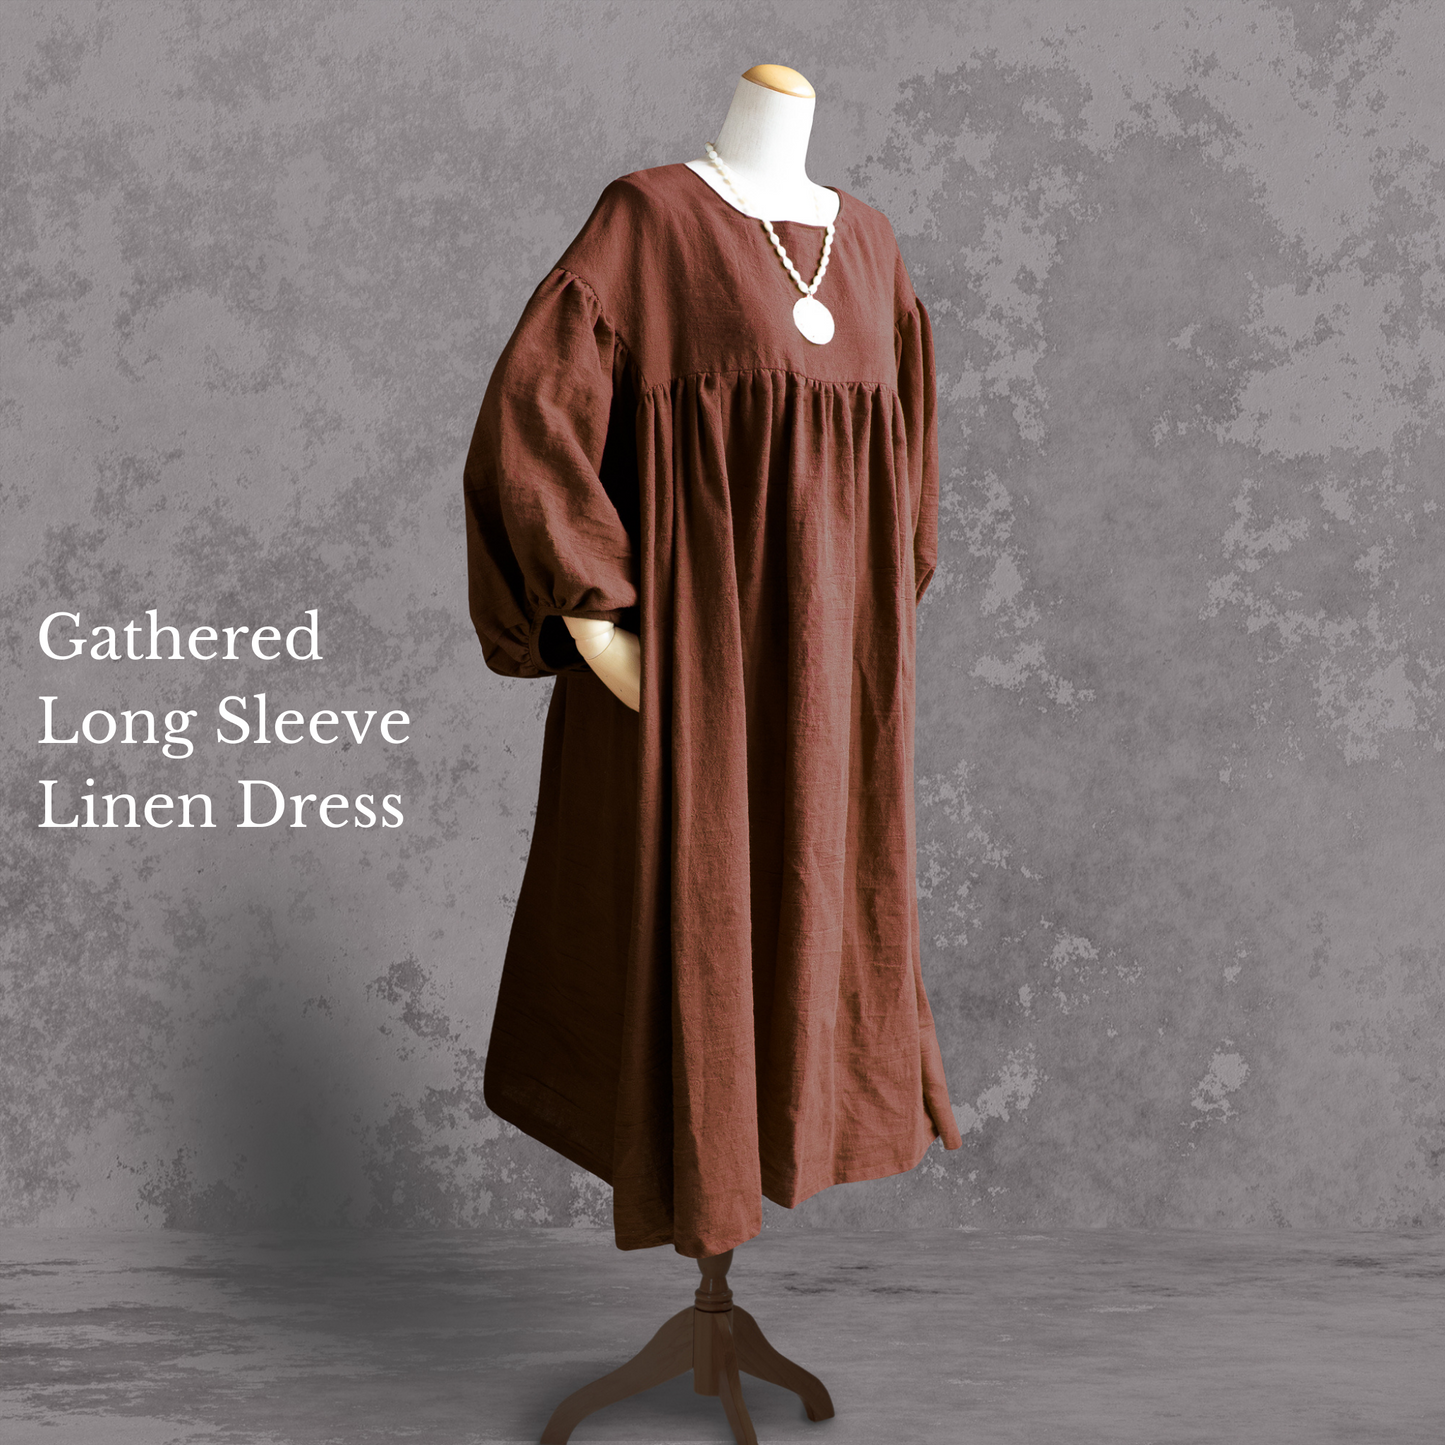 PSNY Natural Linen Gathered Dress Long Sleeve AP22 